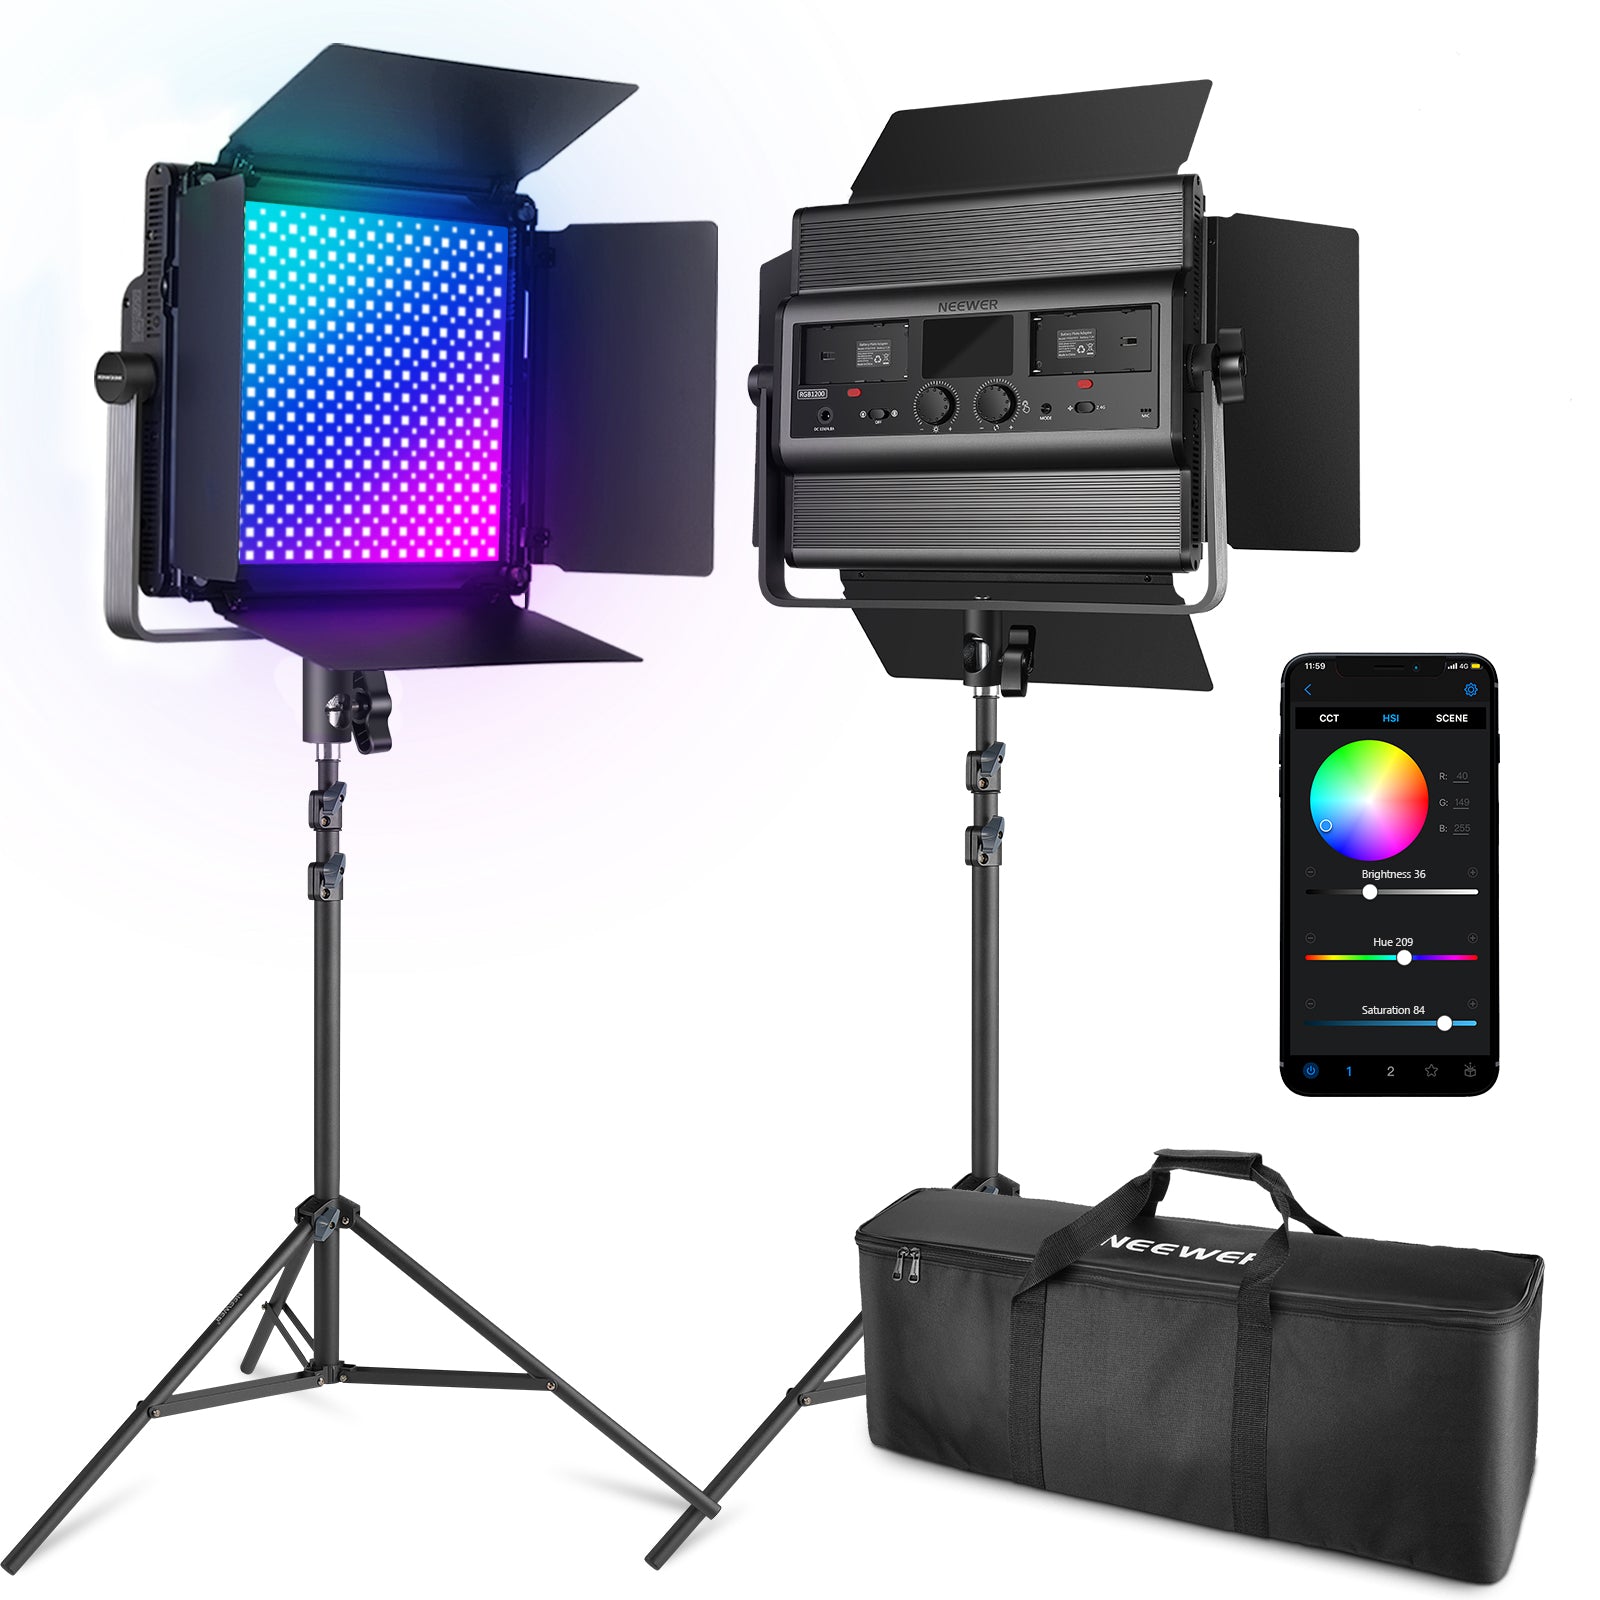 NEEWER 2 Pack RGB660 LED Video Light Kit